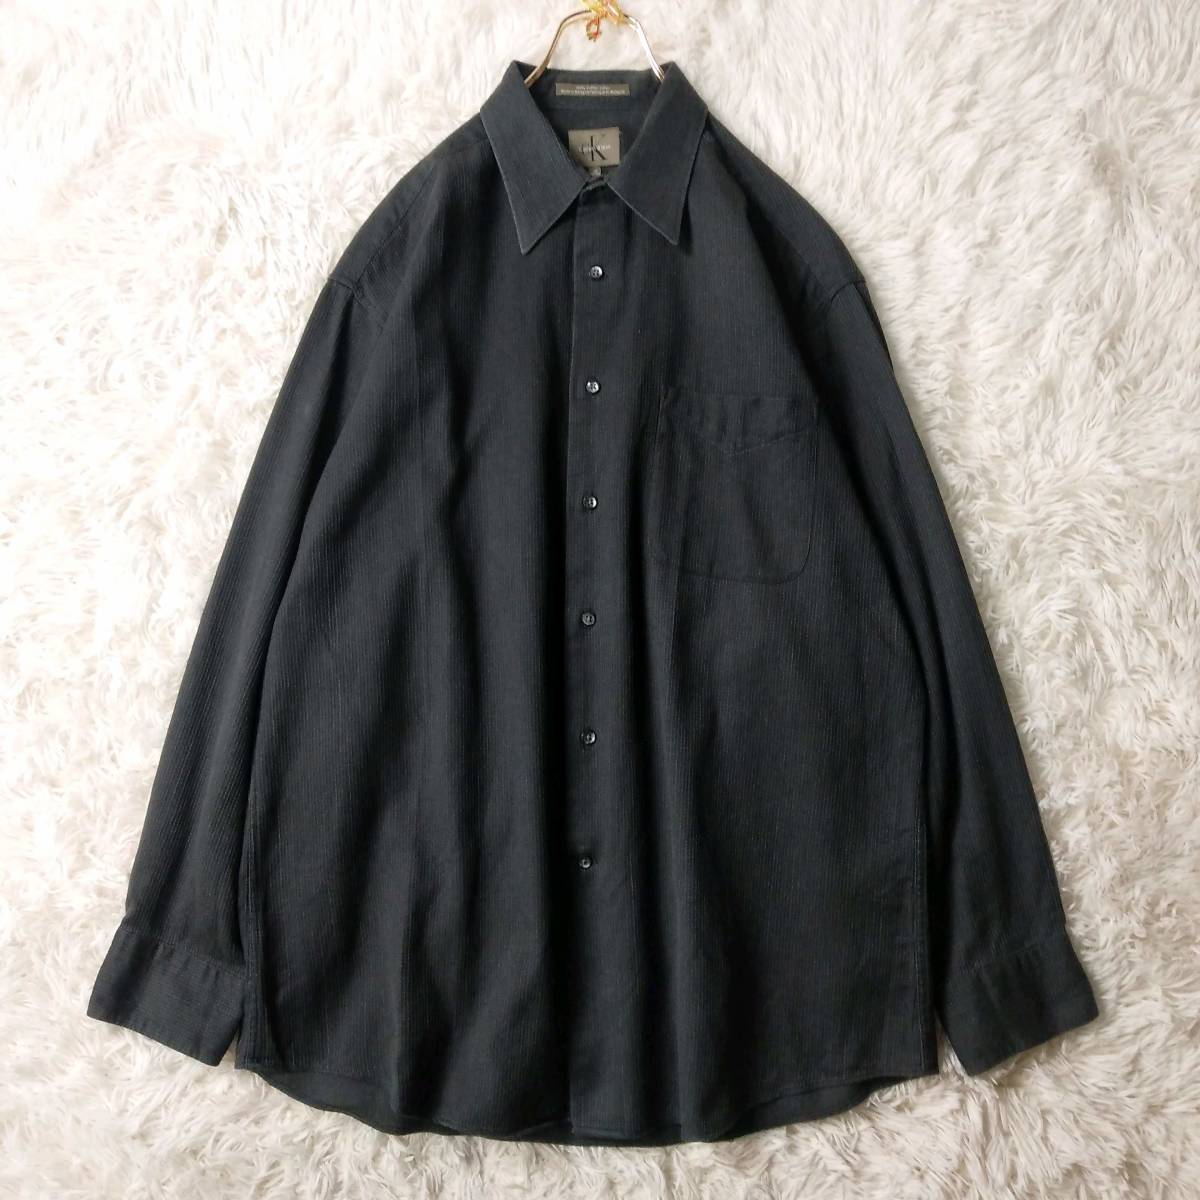 [US import old clothes ]CK Calvin Klein Calvin Klein long sleeve shirt casual shirt M size L size XL size dark gray grey men's 